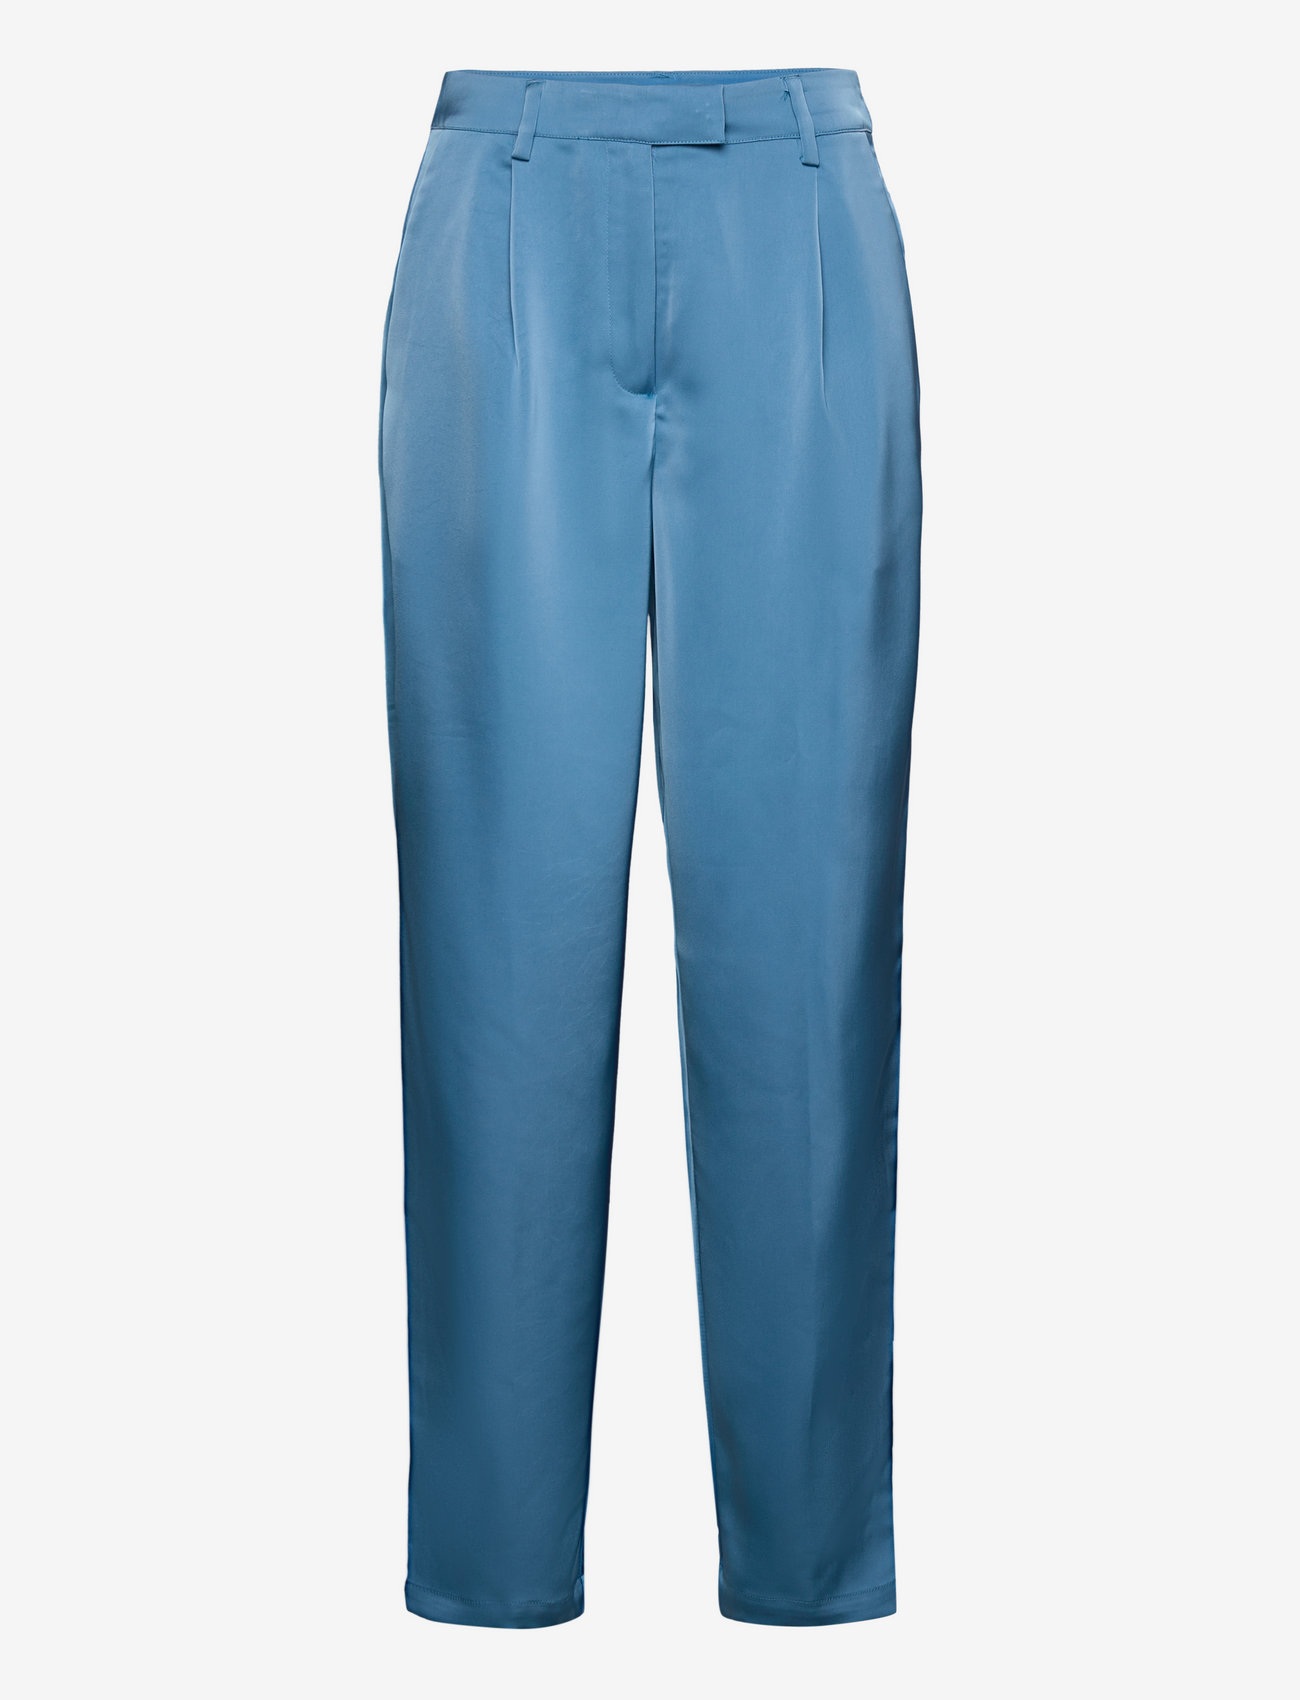 bzr - Satulla Dollar pants - puvunhousut - ocean blue - 0